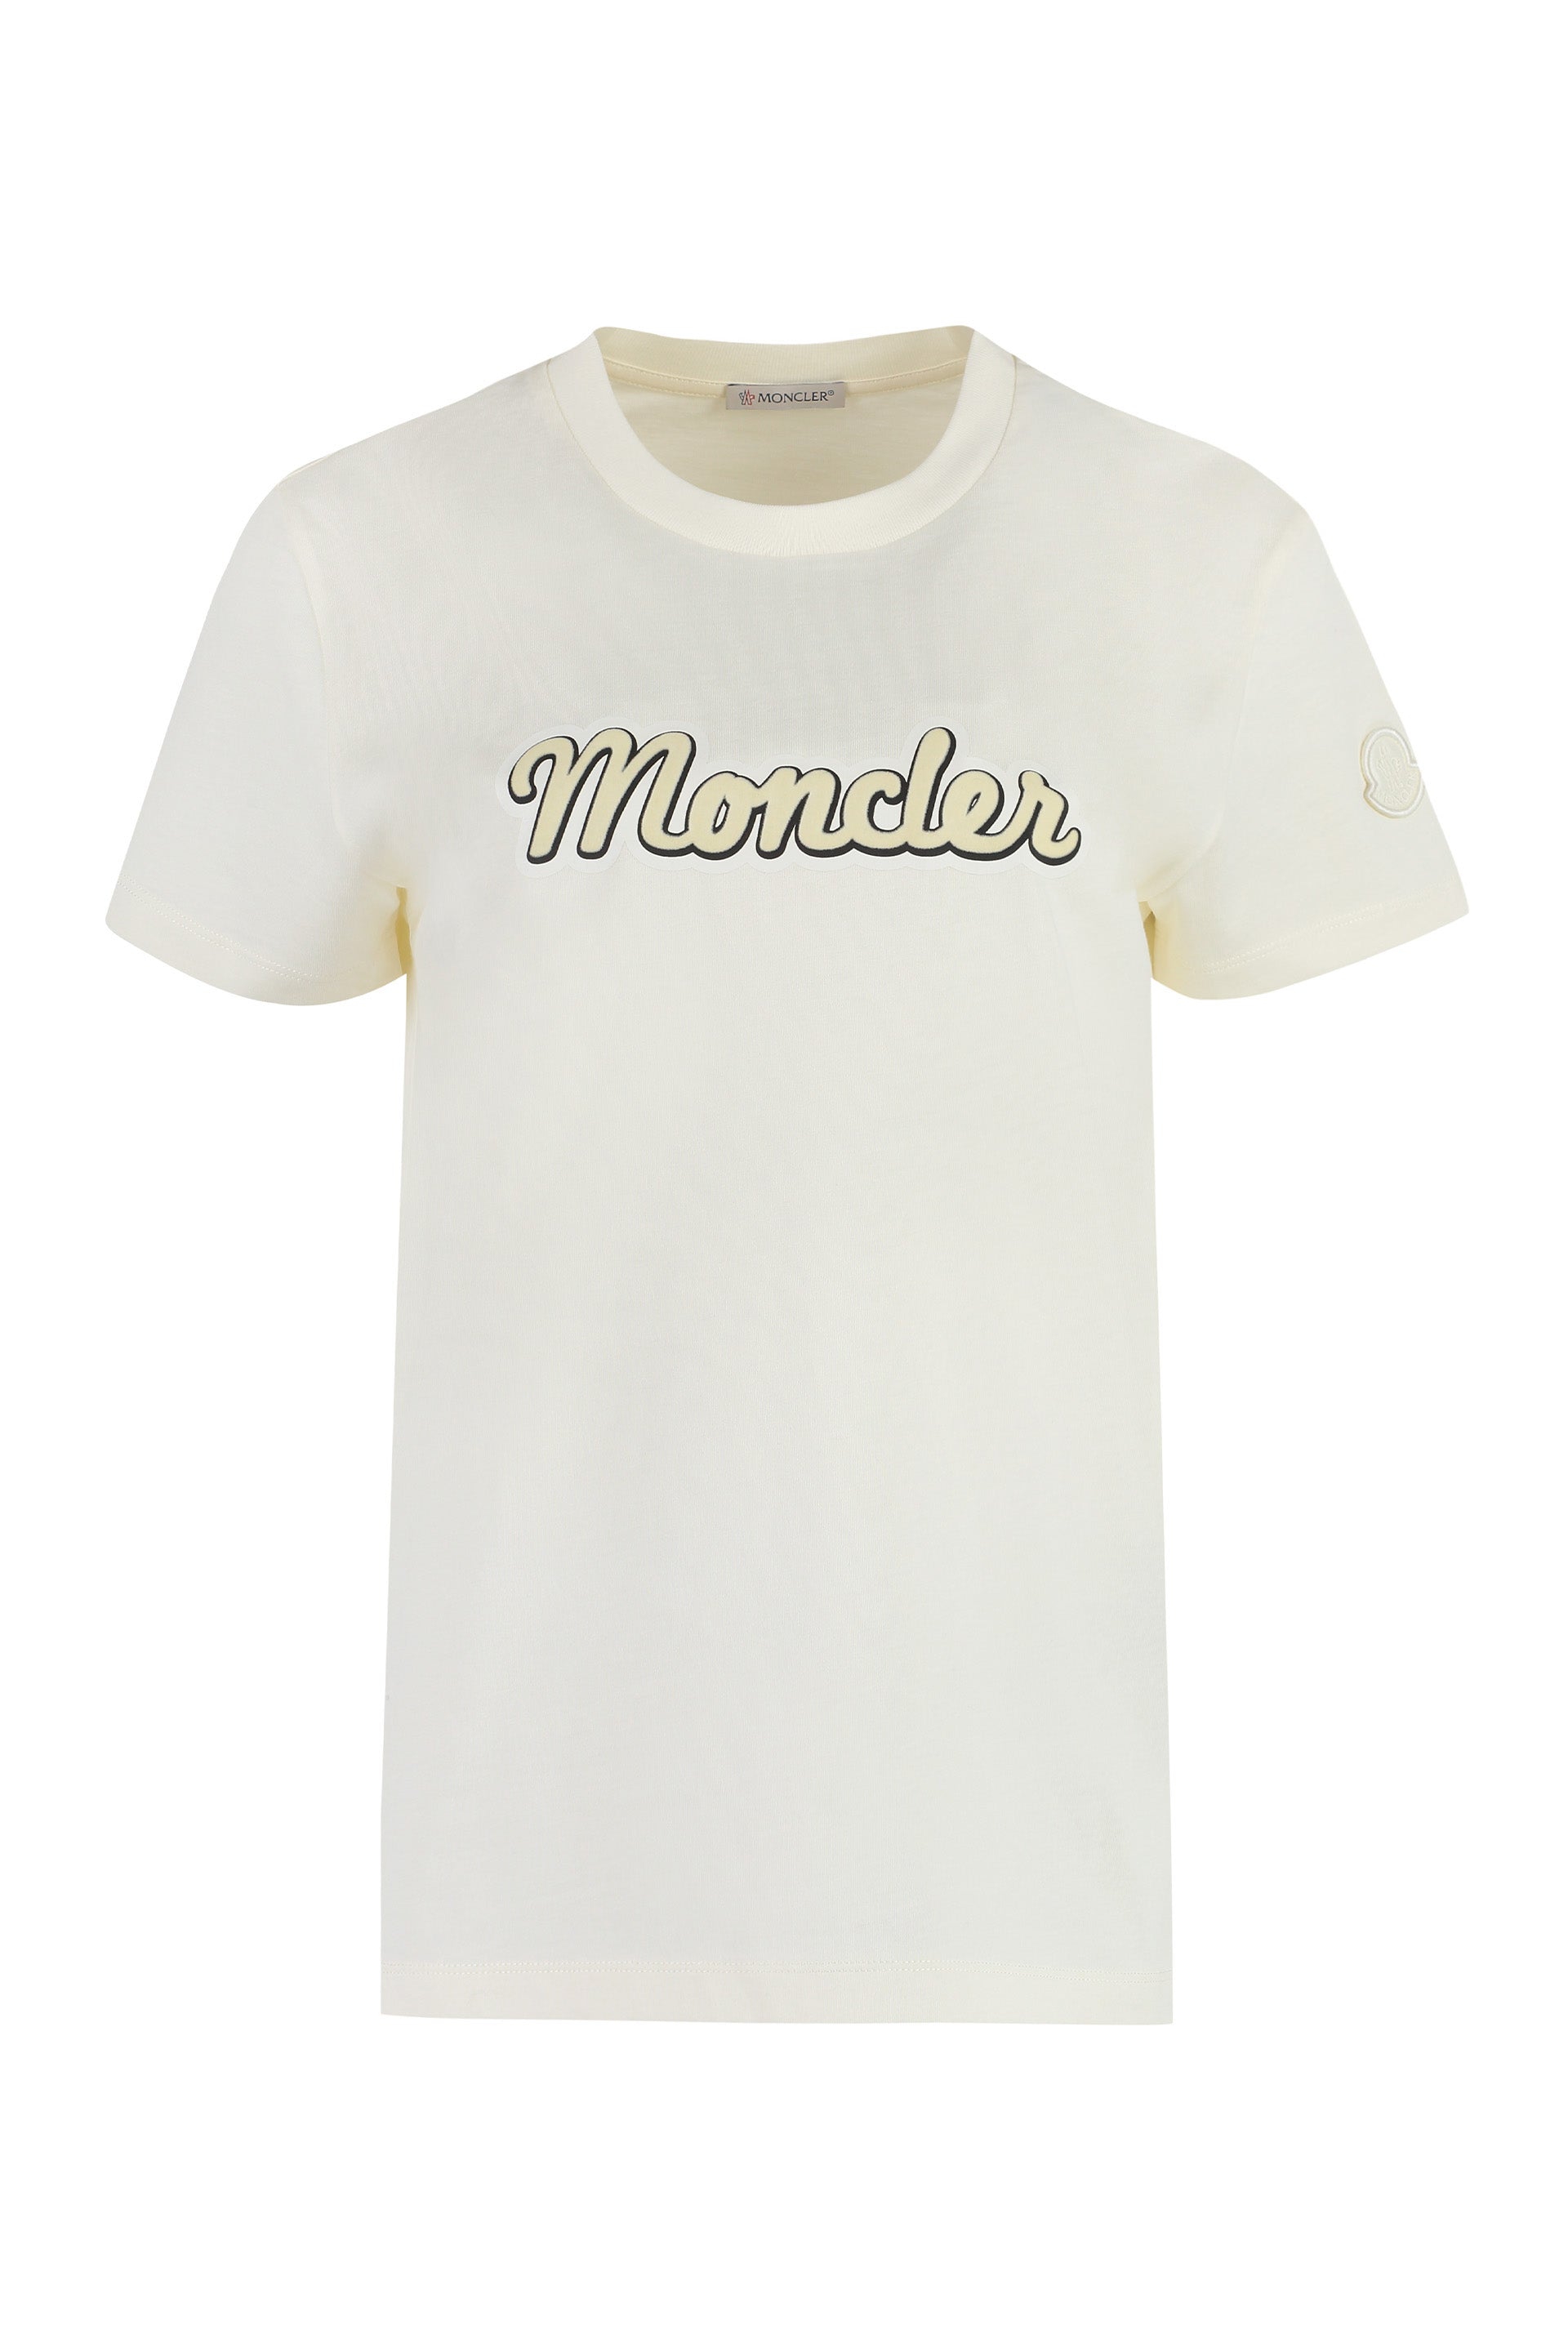 Moncler Women's Logo T-Shirt